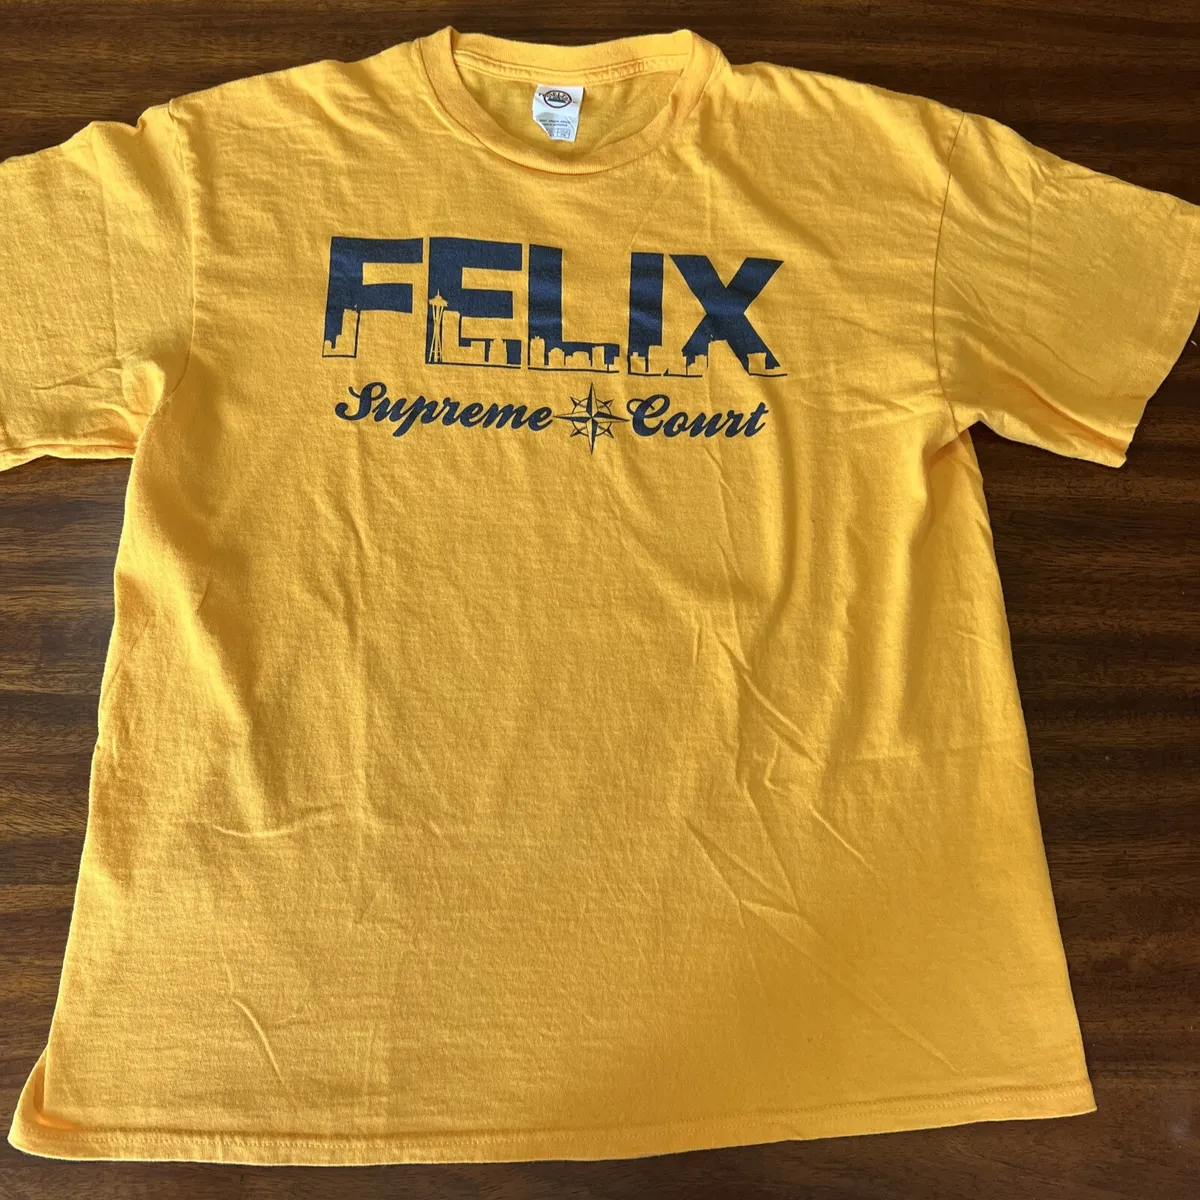 Seattle Mariners Felix Hernandez Supreme King's Court Shirt XL